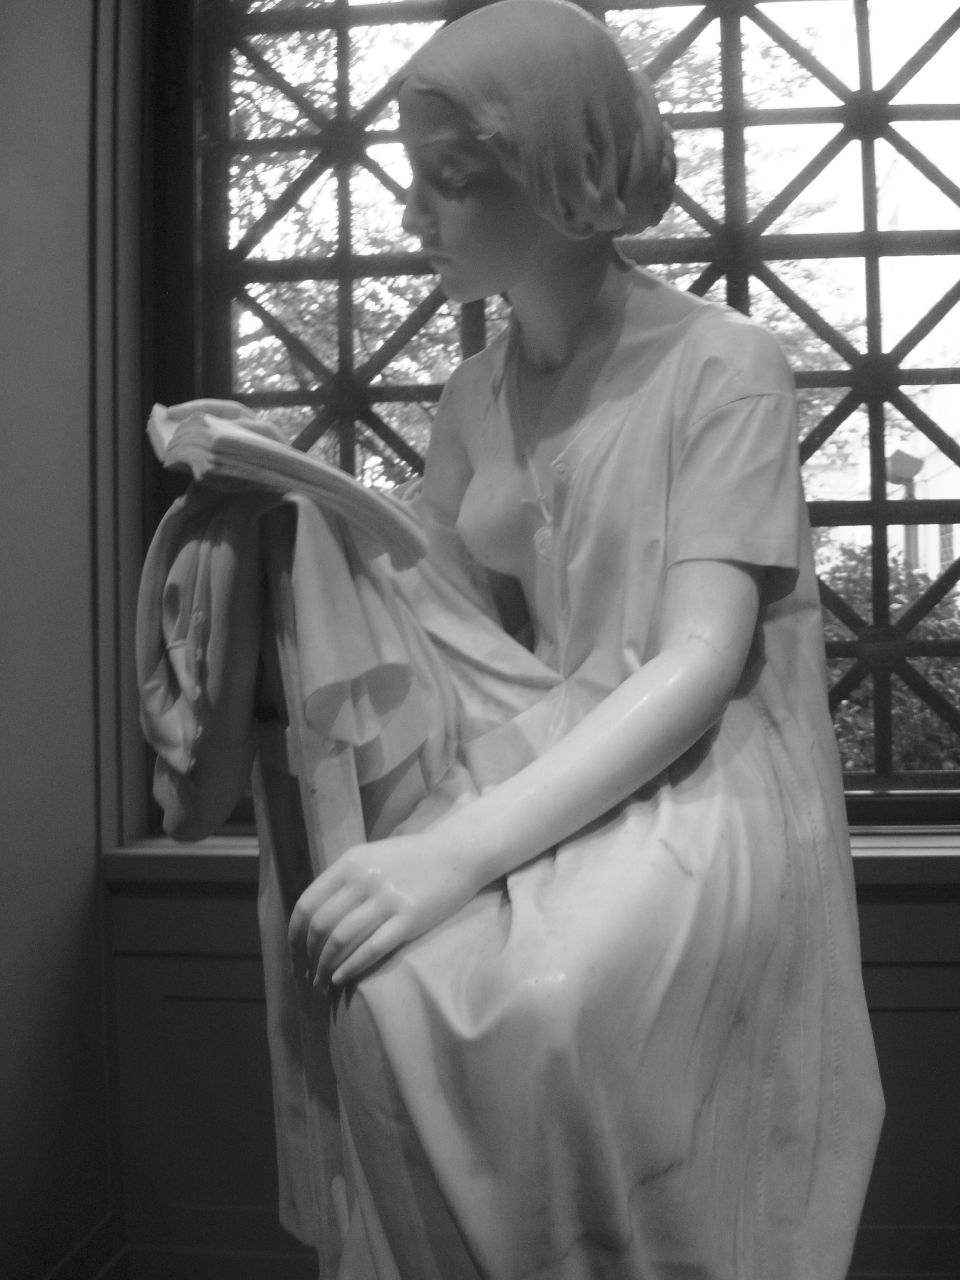 a statue in a white dress is sitting near a window